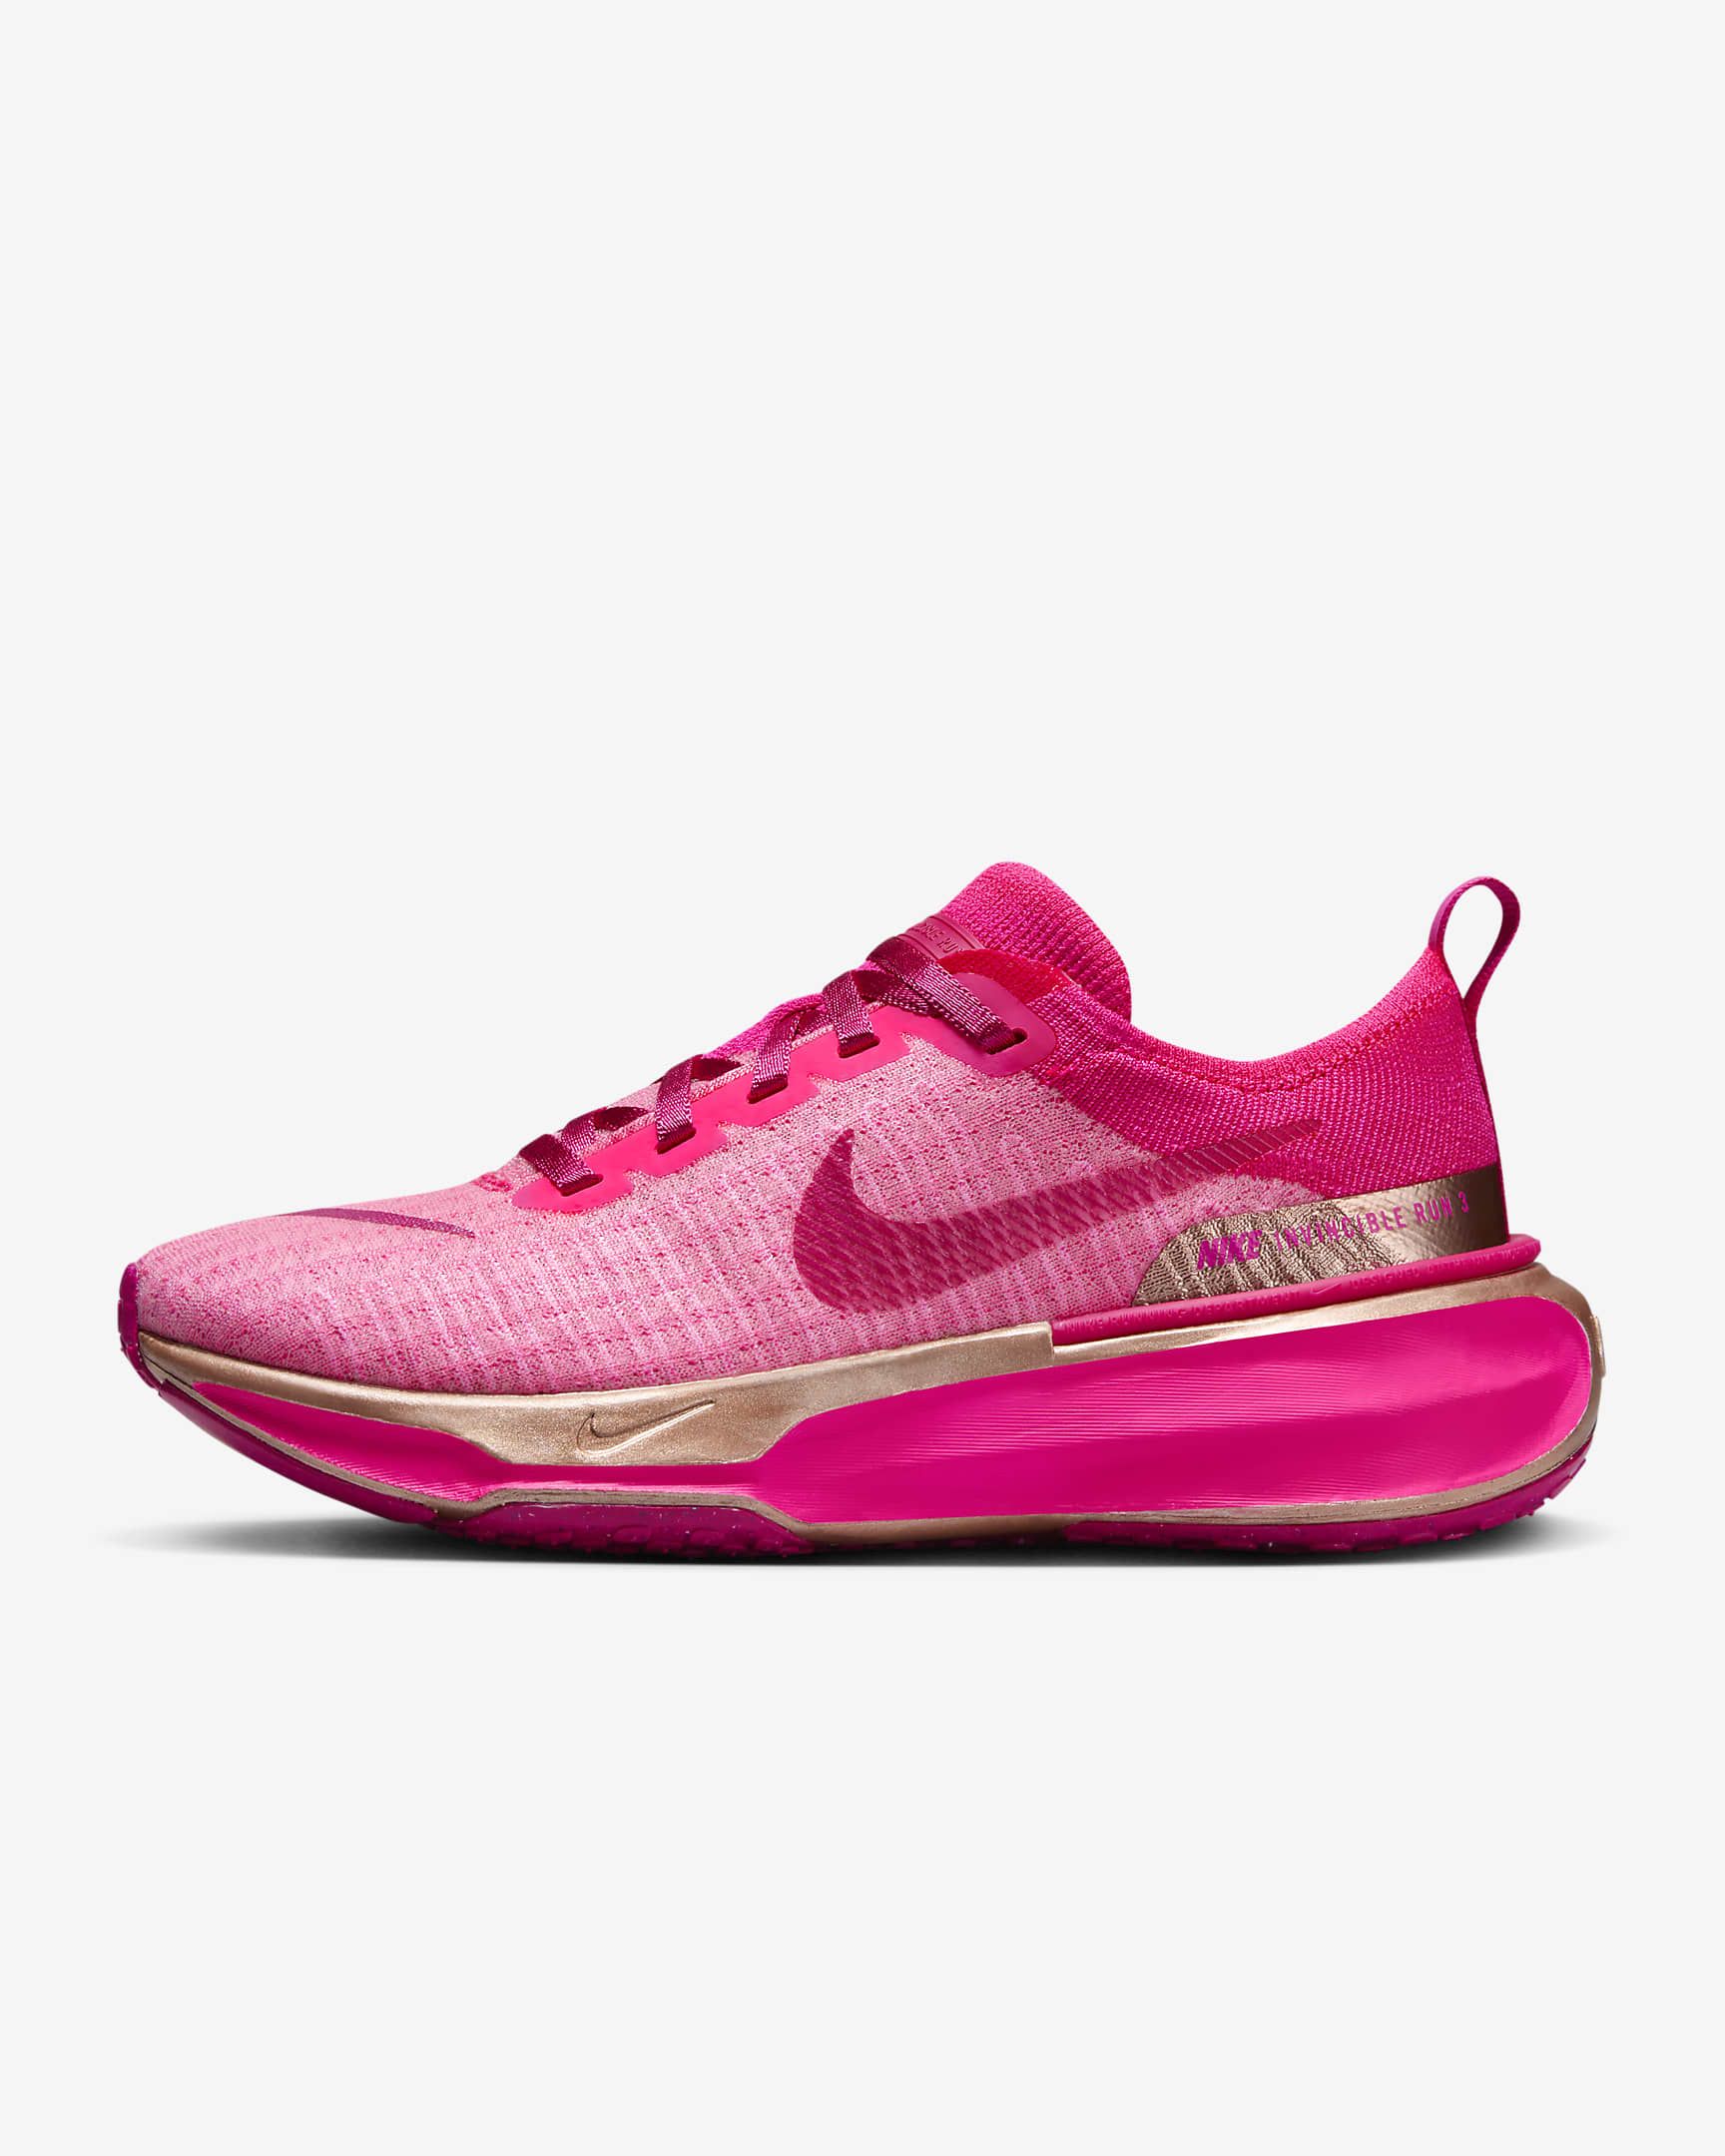 Nike Invincible 3 Women's Road Running Shoes. Nike.com | Nike (US)